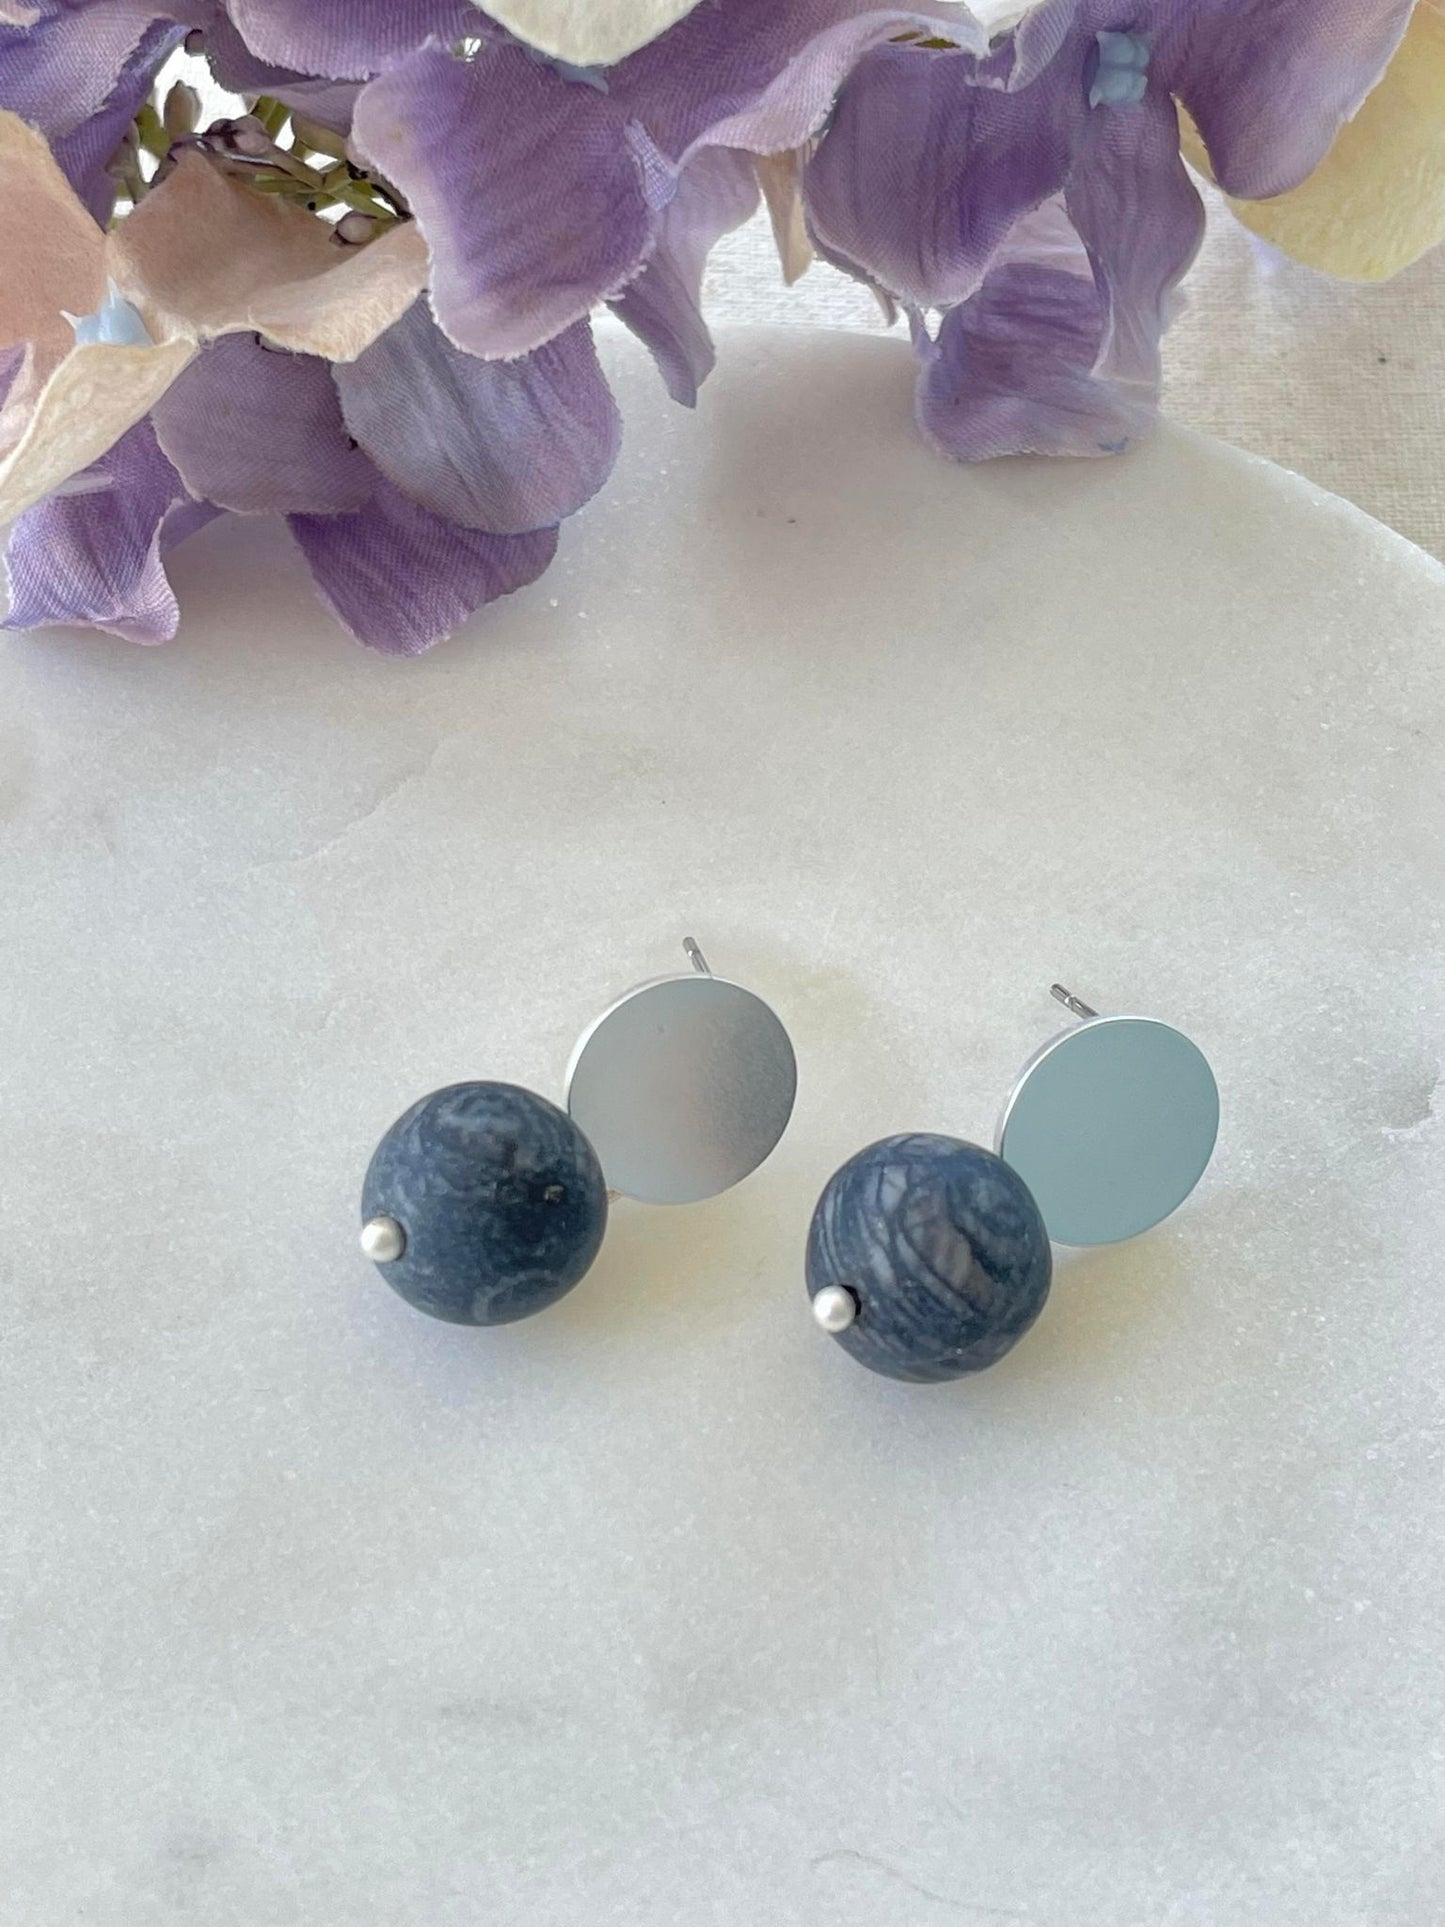 Small blackish bead on silver stud earrings